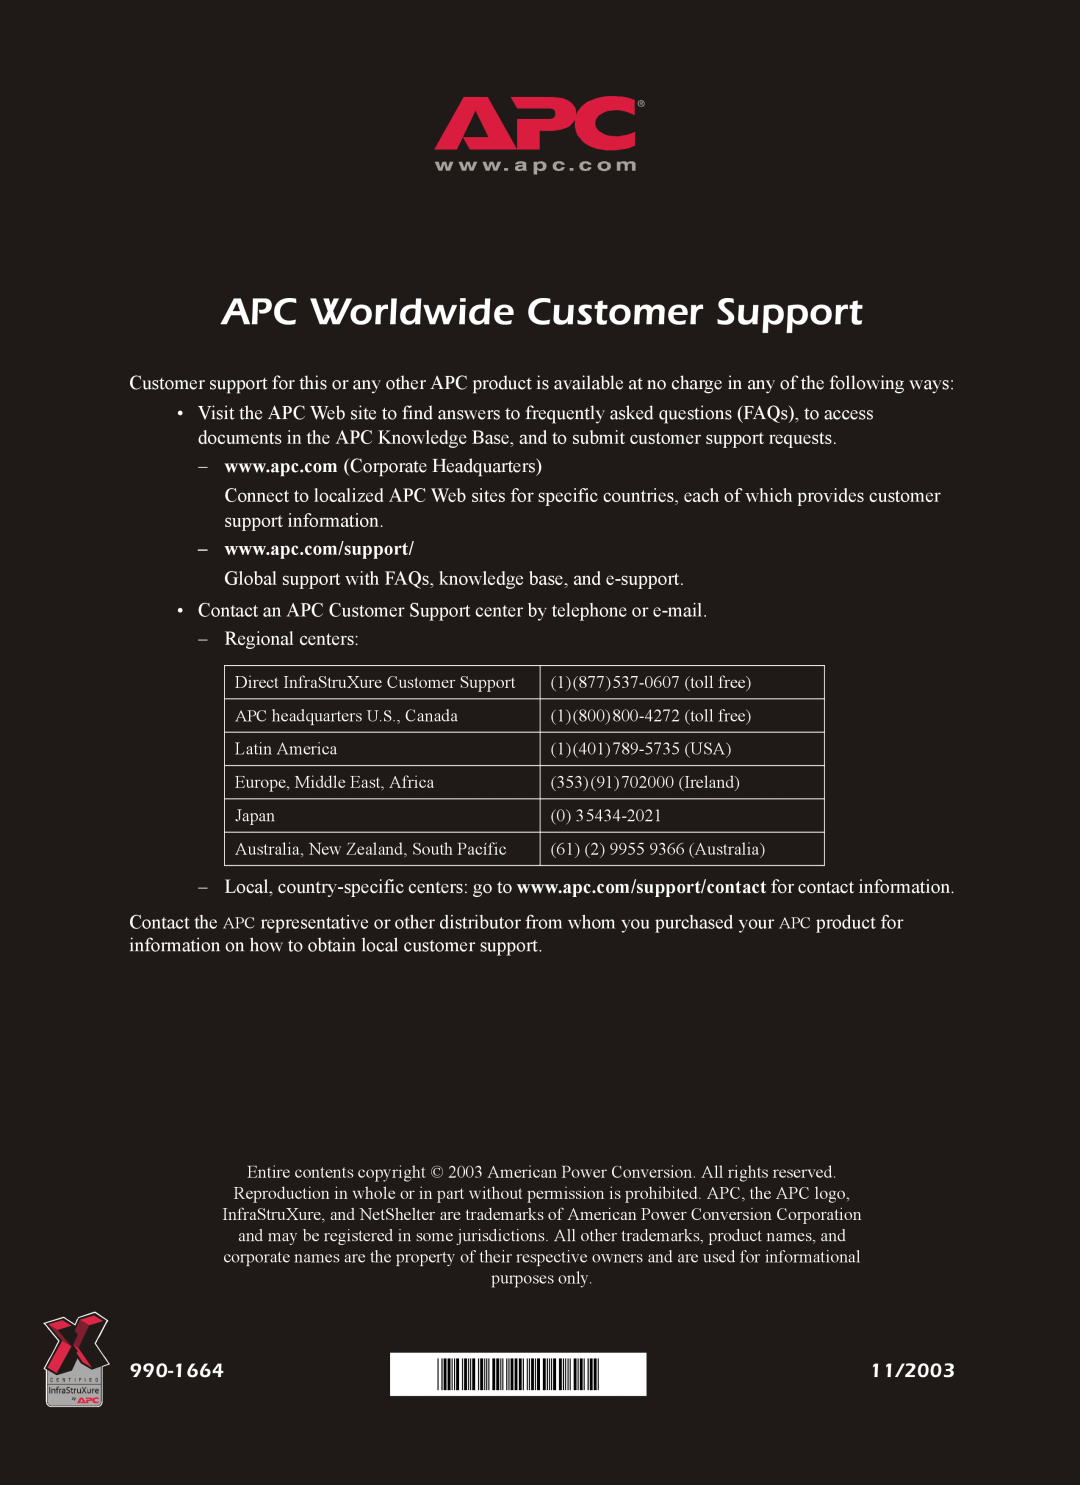 American Power Conversion AP7902 AP7911 quick start 990-1664, APC Worldwide Customer Support, 11/2003 